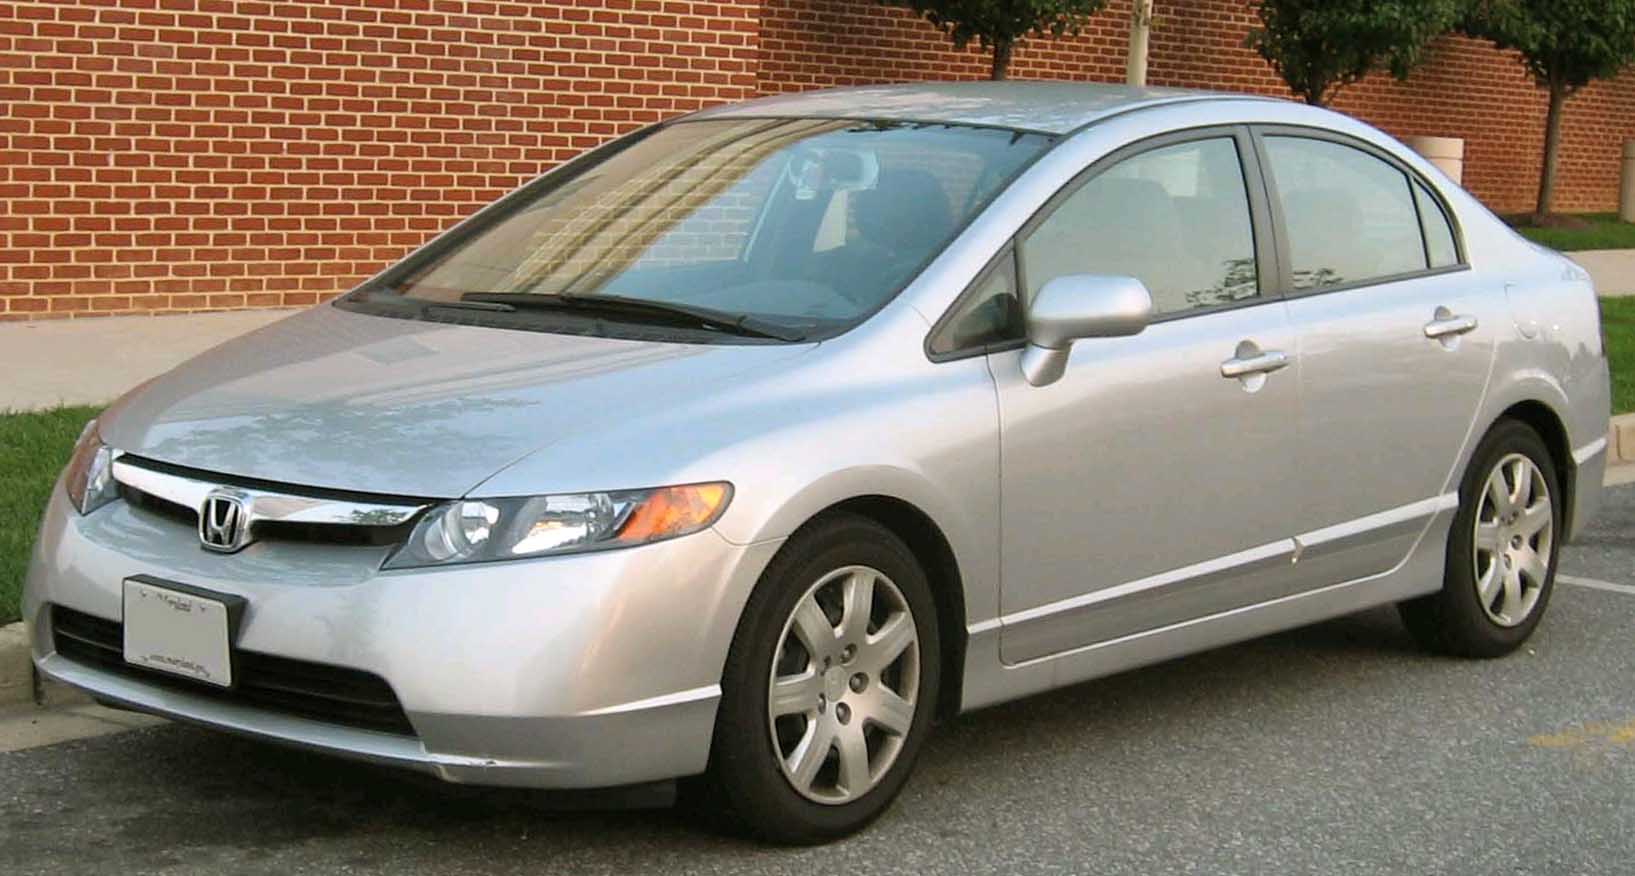 File:06-07 Honda Civic LX Sedan.jpg - Wikipedia